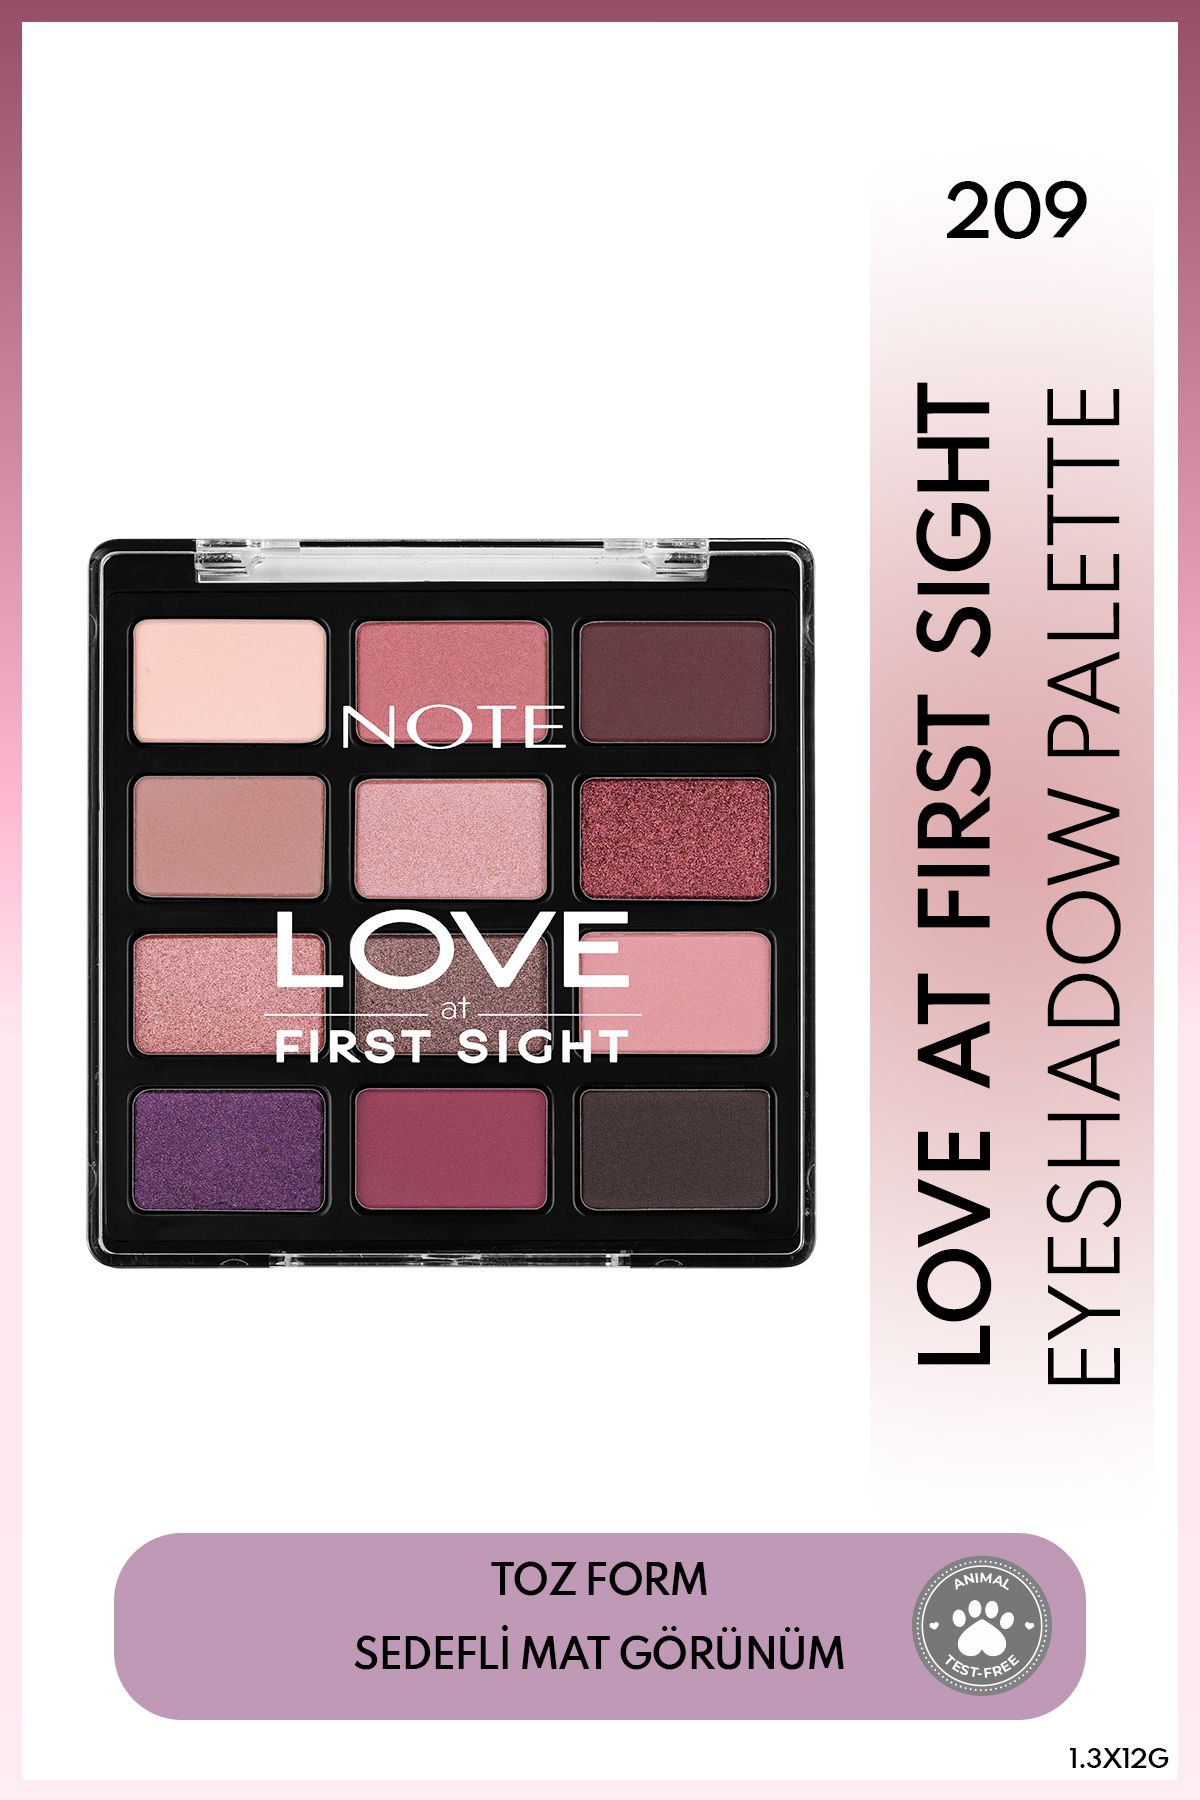 Note Cosmetics Love at First Sight Far Paleti 209